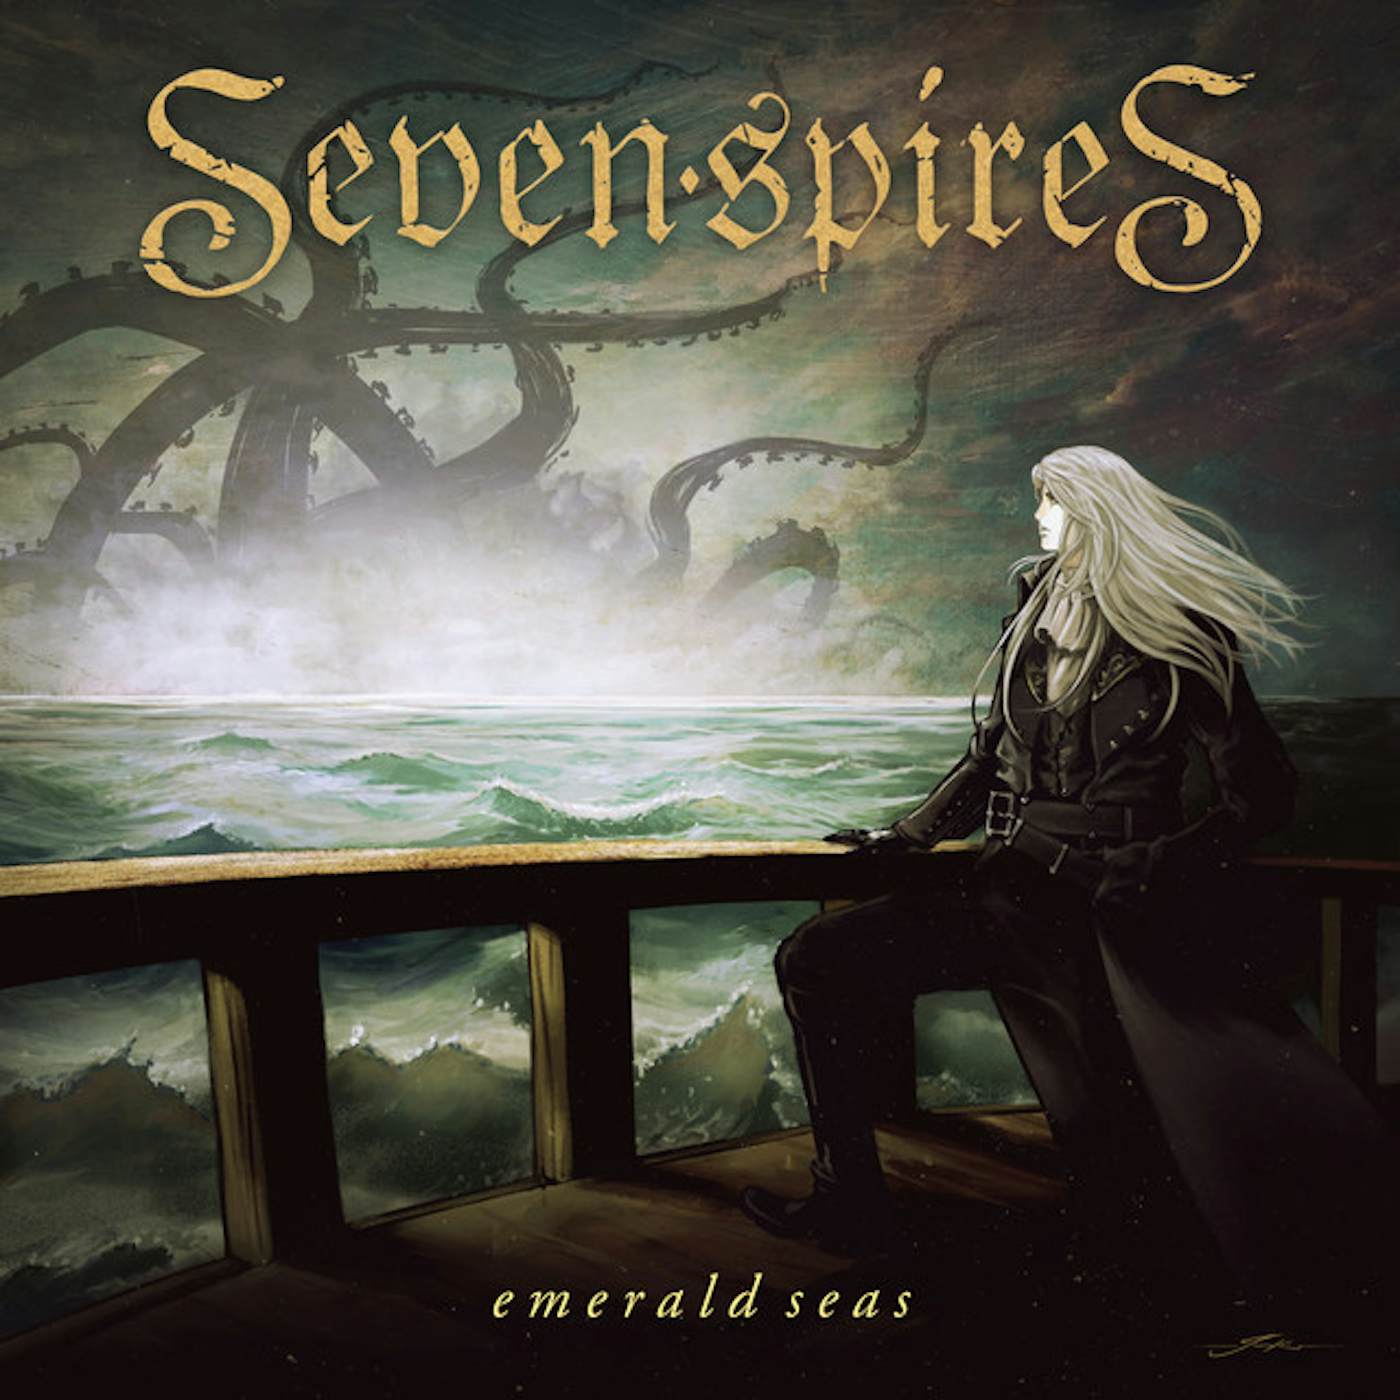 Seven Spires EMERALD SEAS CD